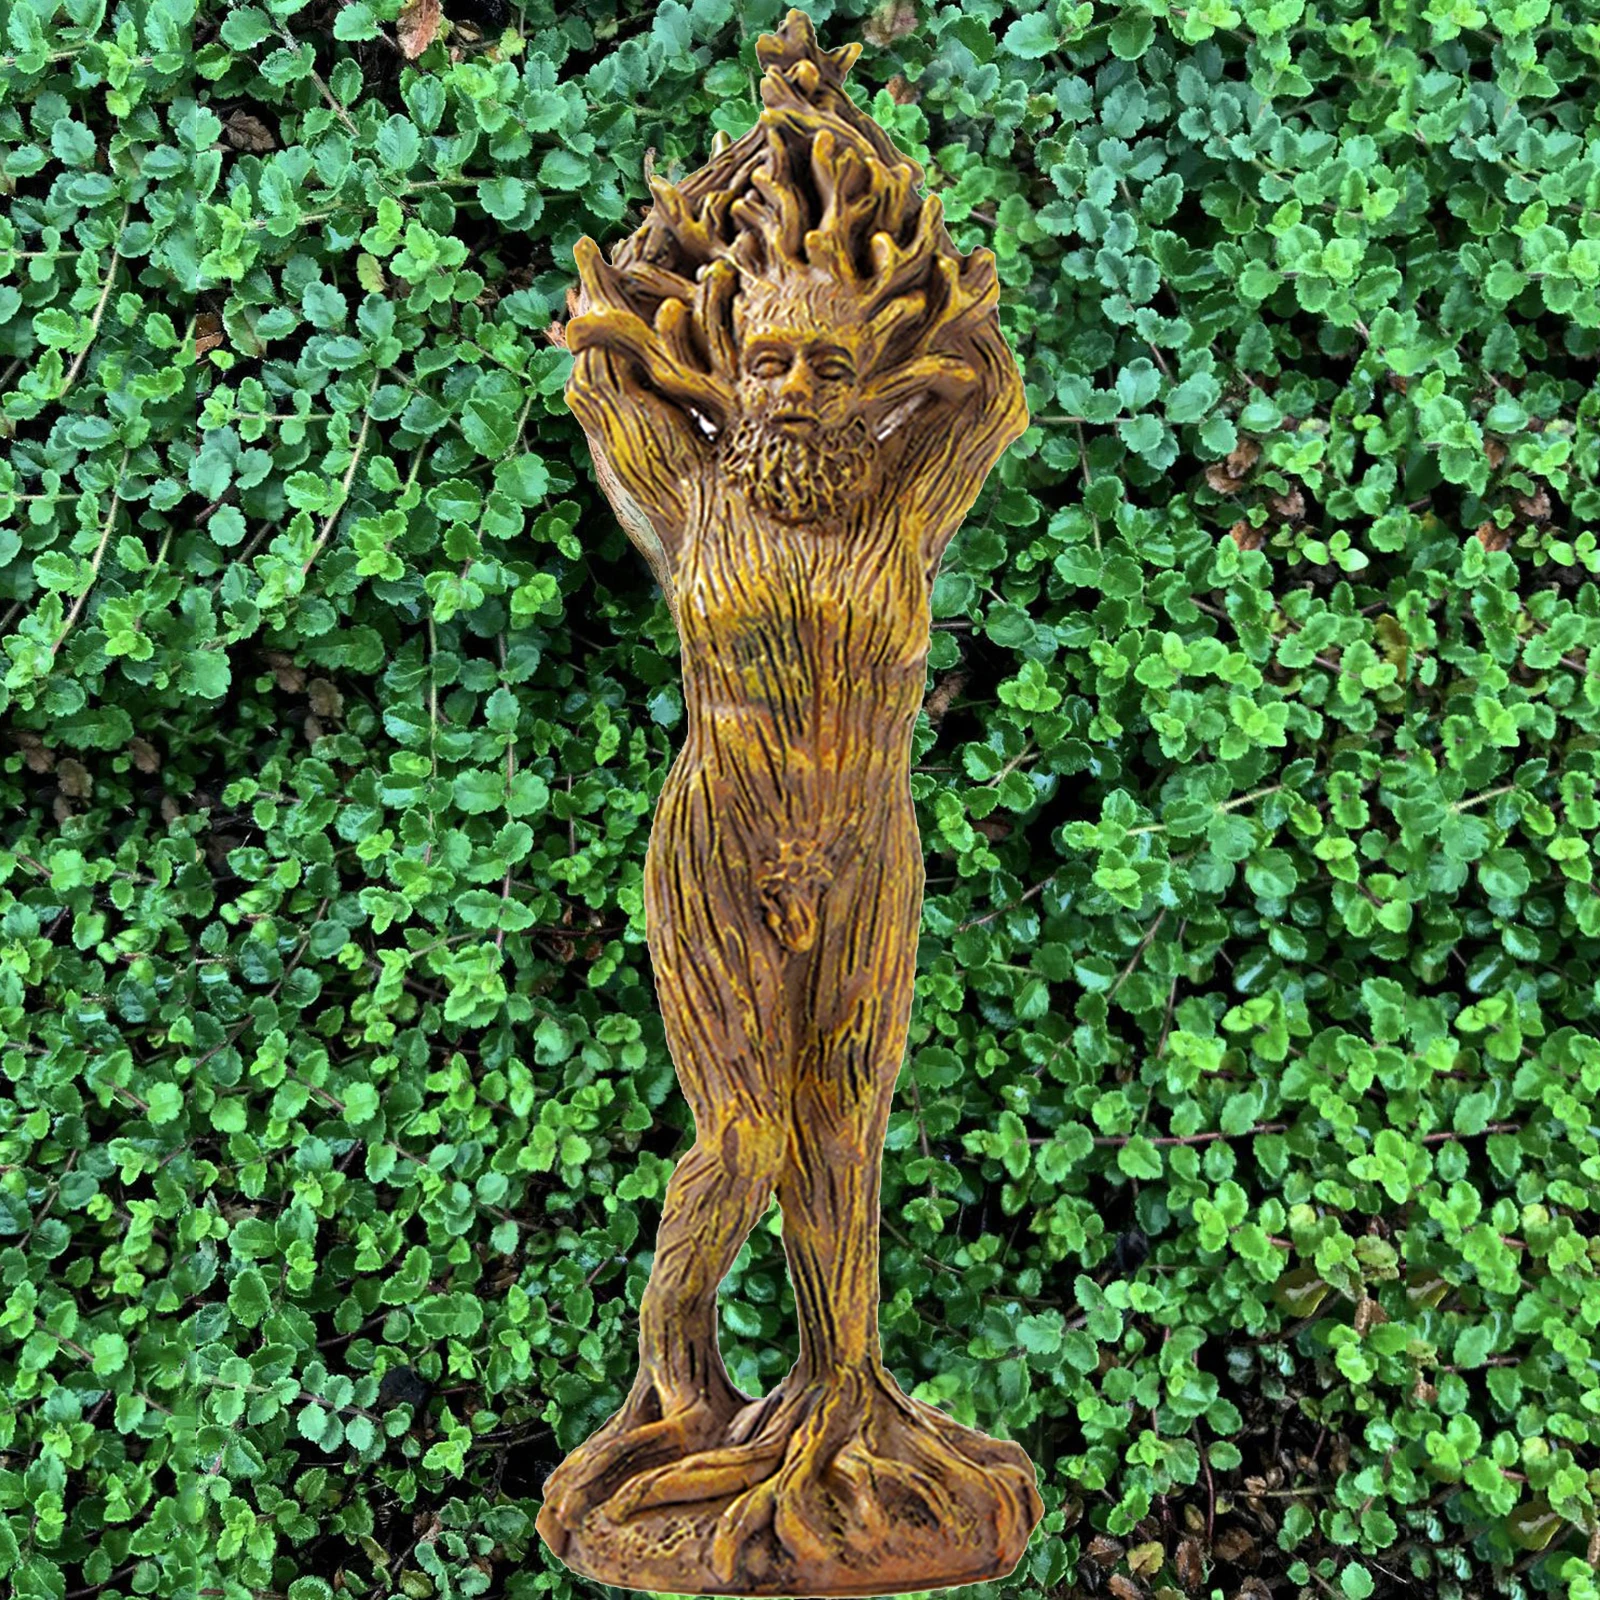 Tree Shaped Resin Forest Statue Crafts Ornament Tree Figurine Garden Decoration Sculpture Home Office Desktop Decor